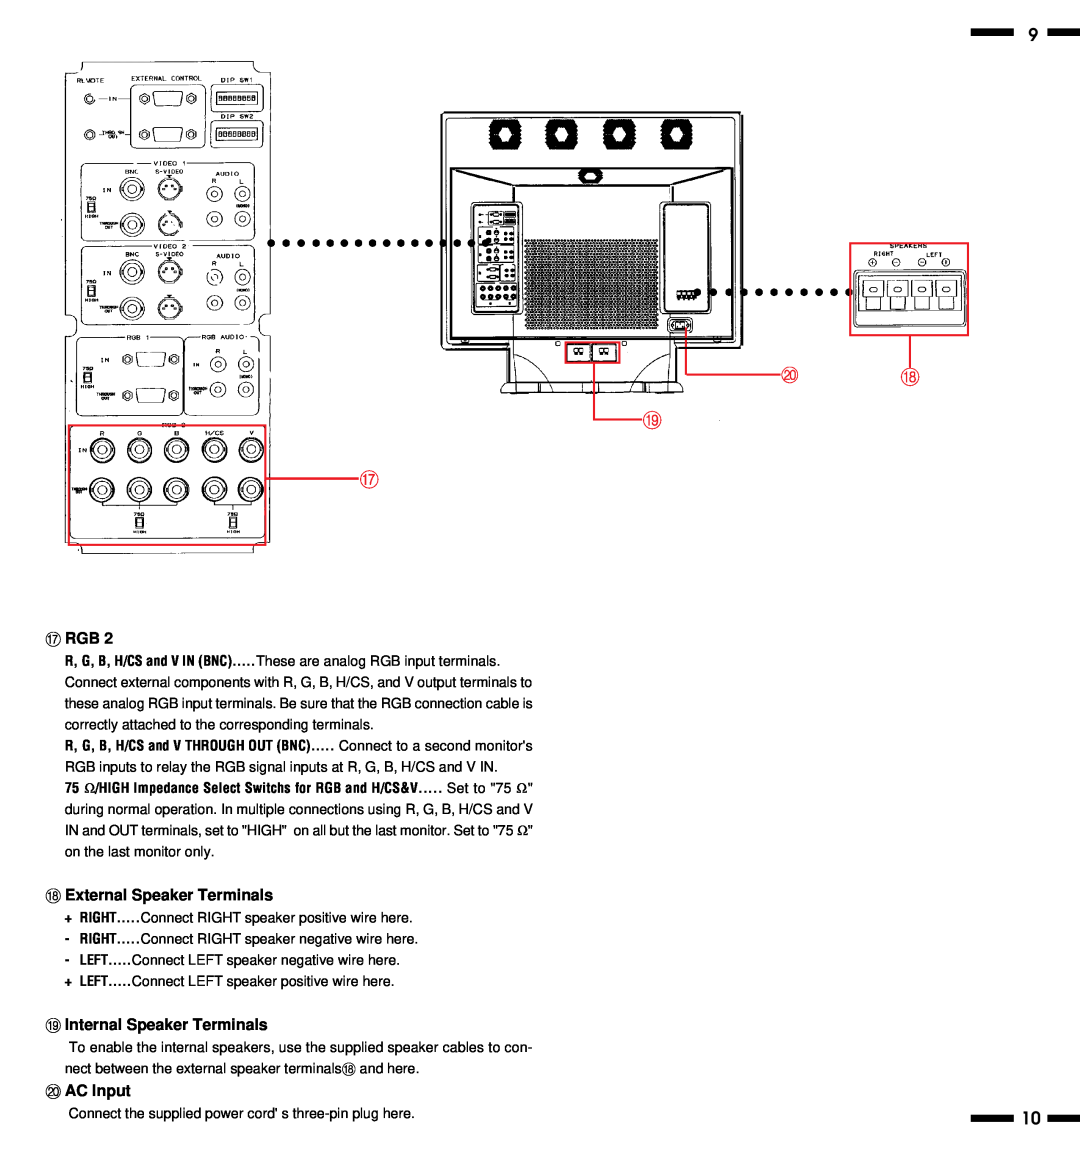 NEC PlasmaSync 3300 user manual G Rgb, H External Speaker Terminals, I Internal Speaker Terminals, J AC Input 